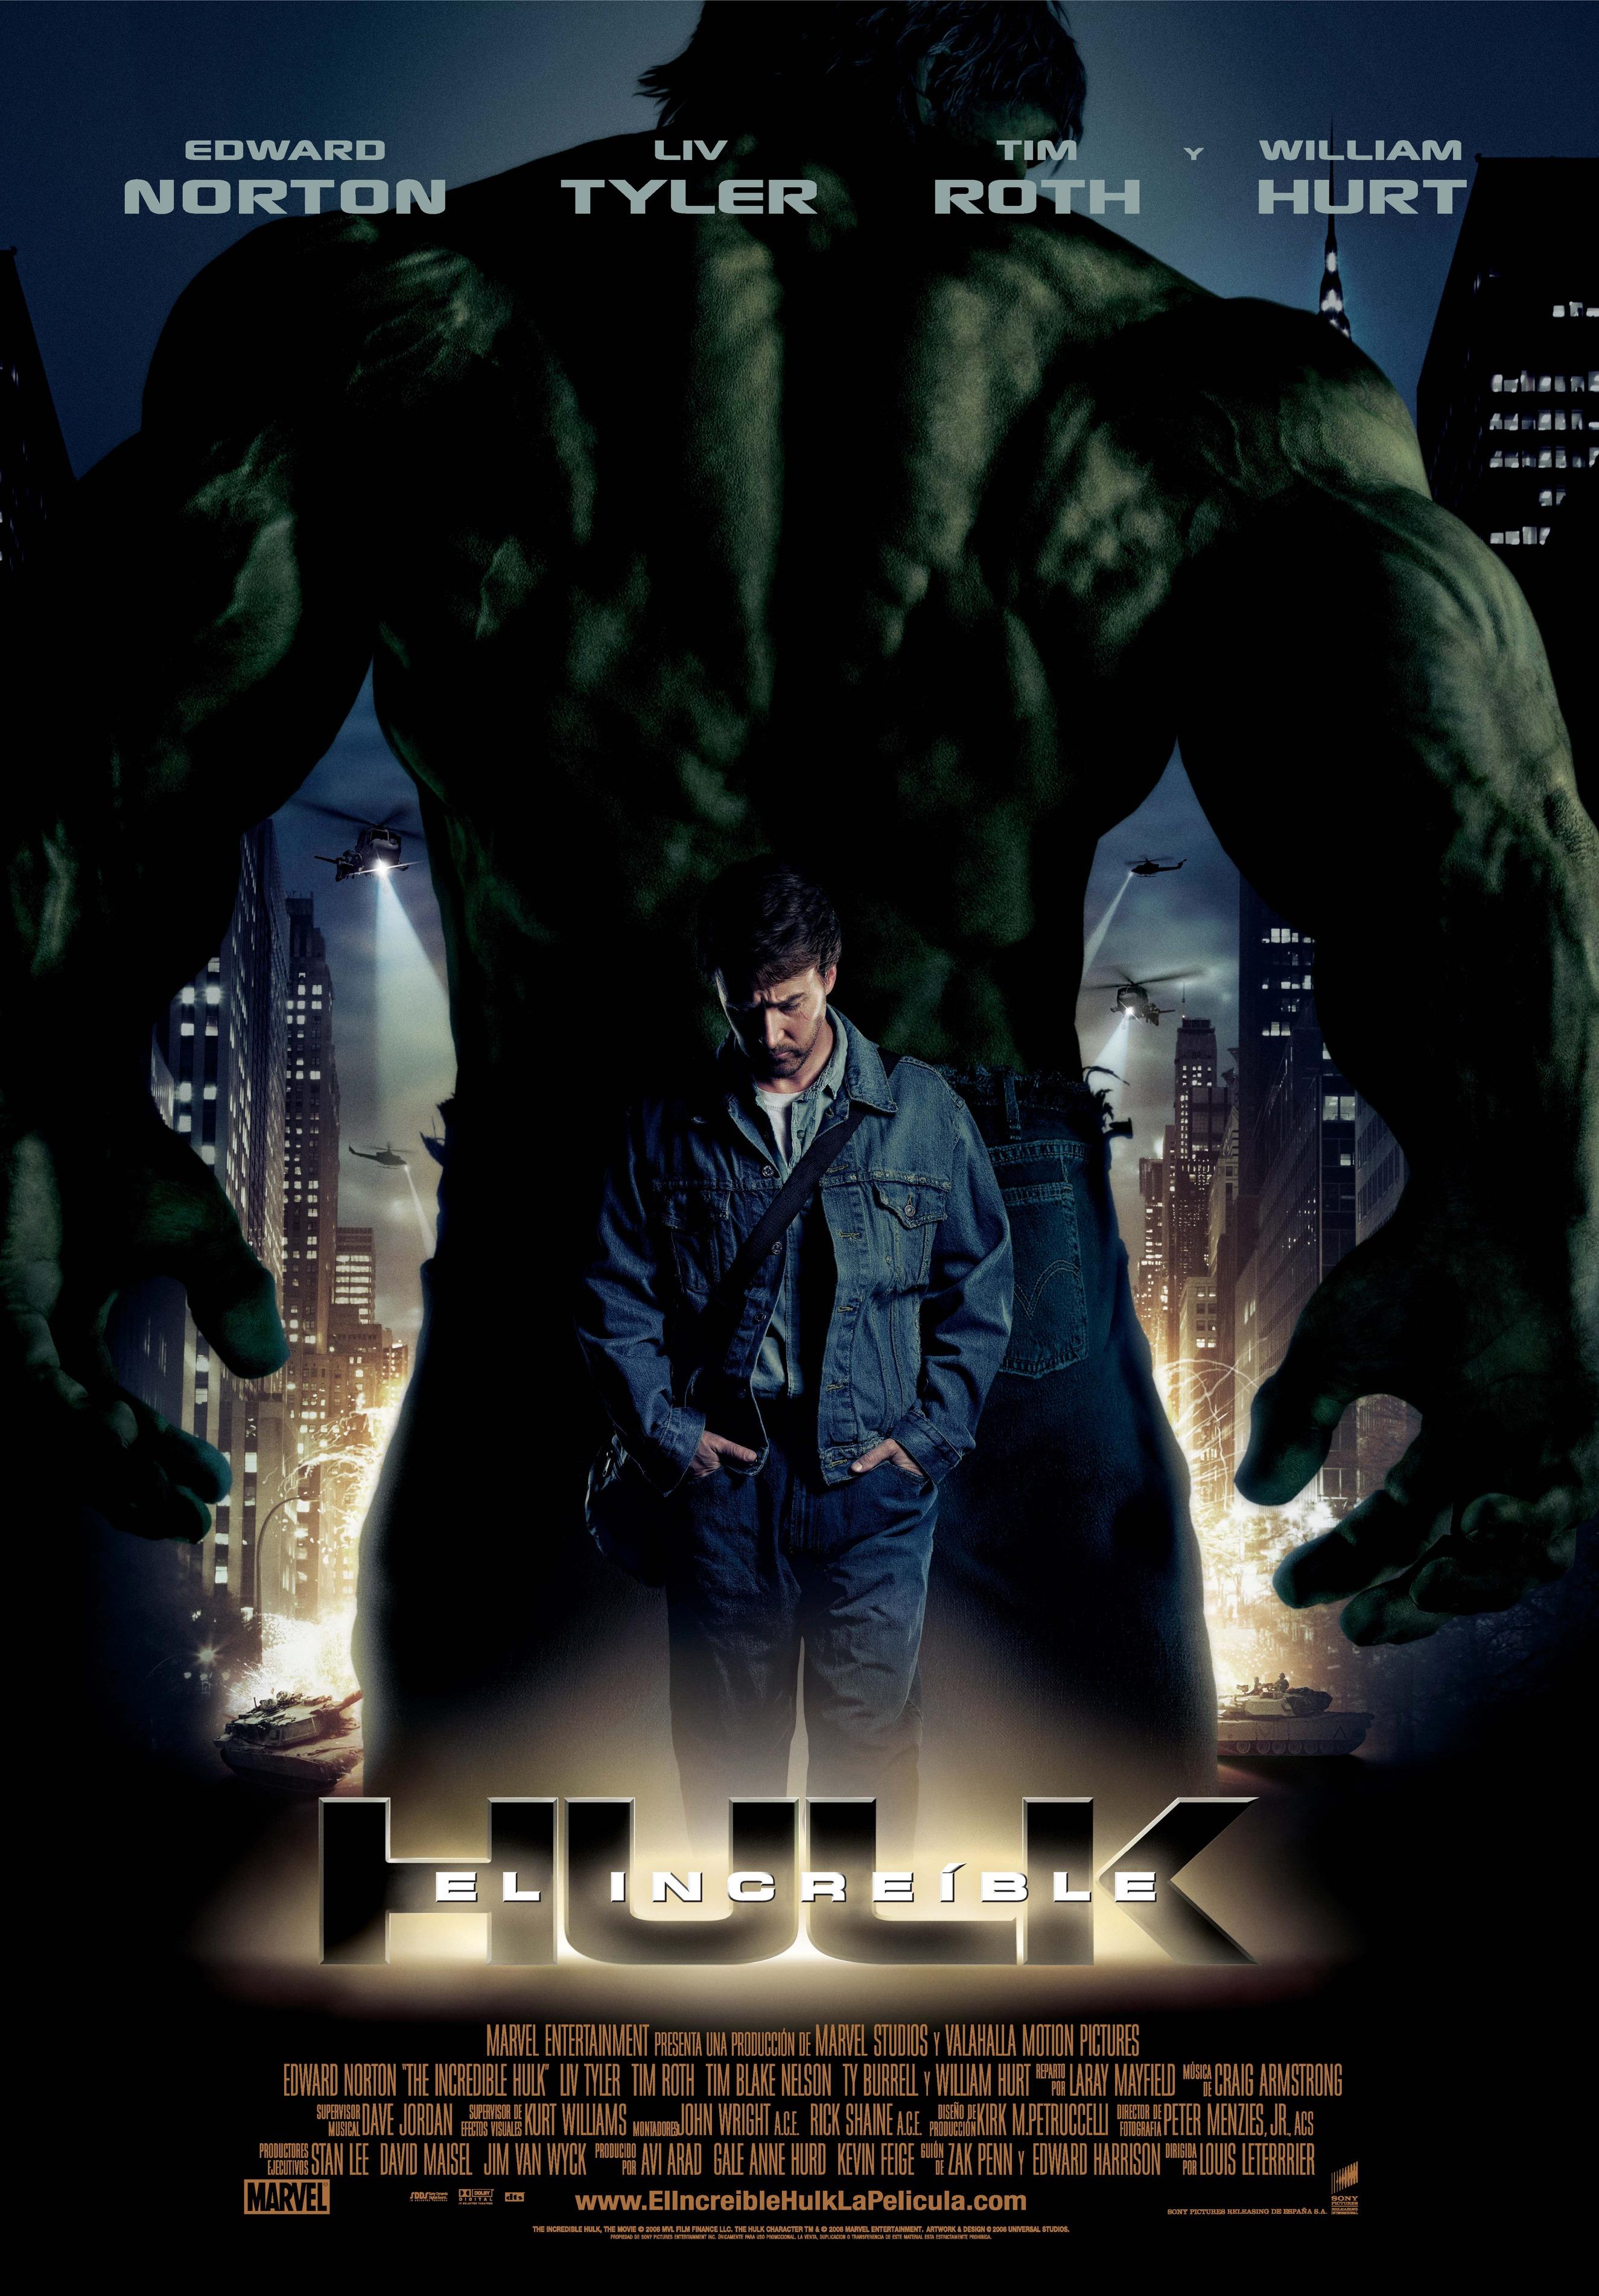 The Incredible Hulk 2008 Poster